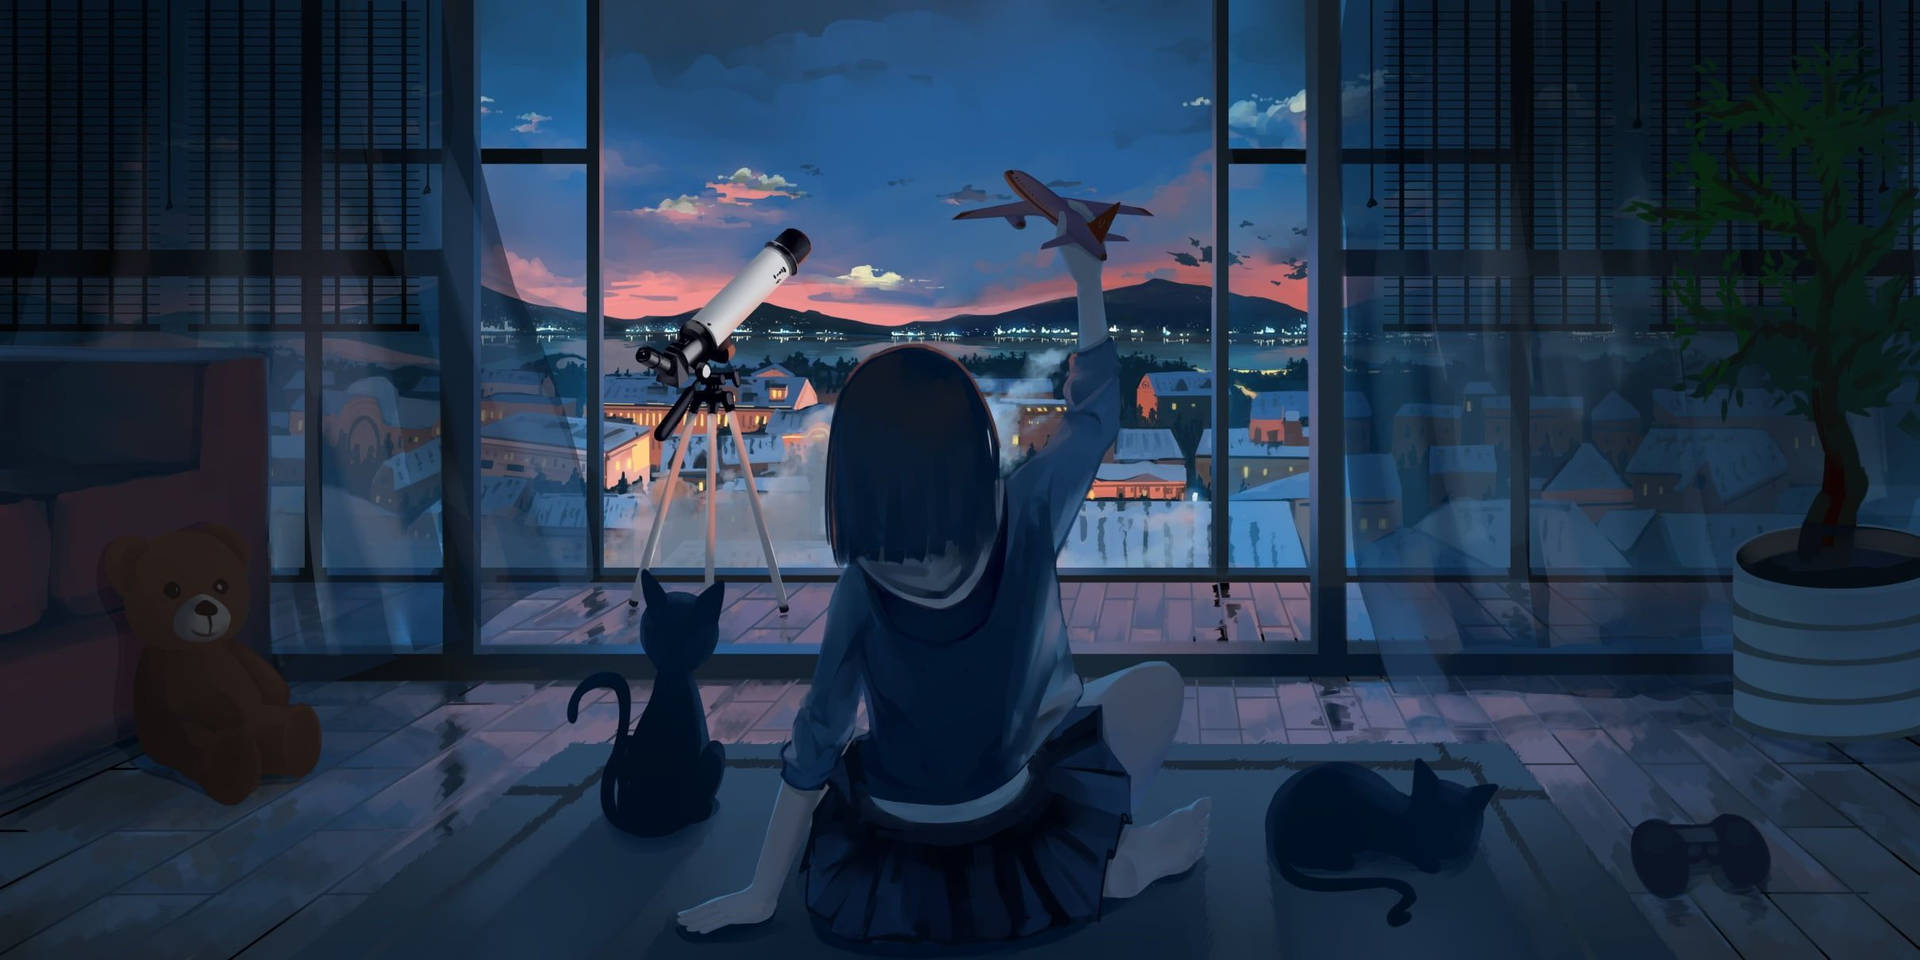 🌟 Anime Wallpapers 4K - HD Anime Backgrounds for Desktop